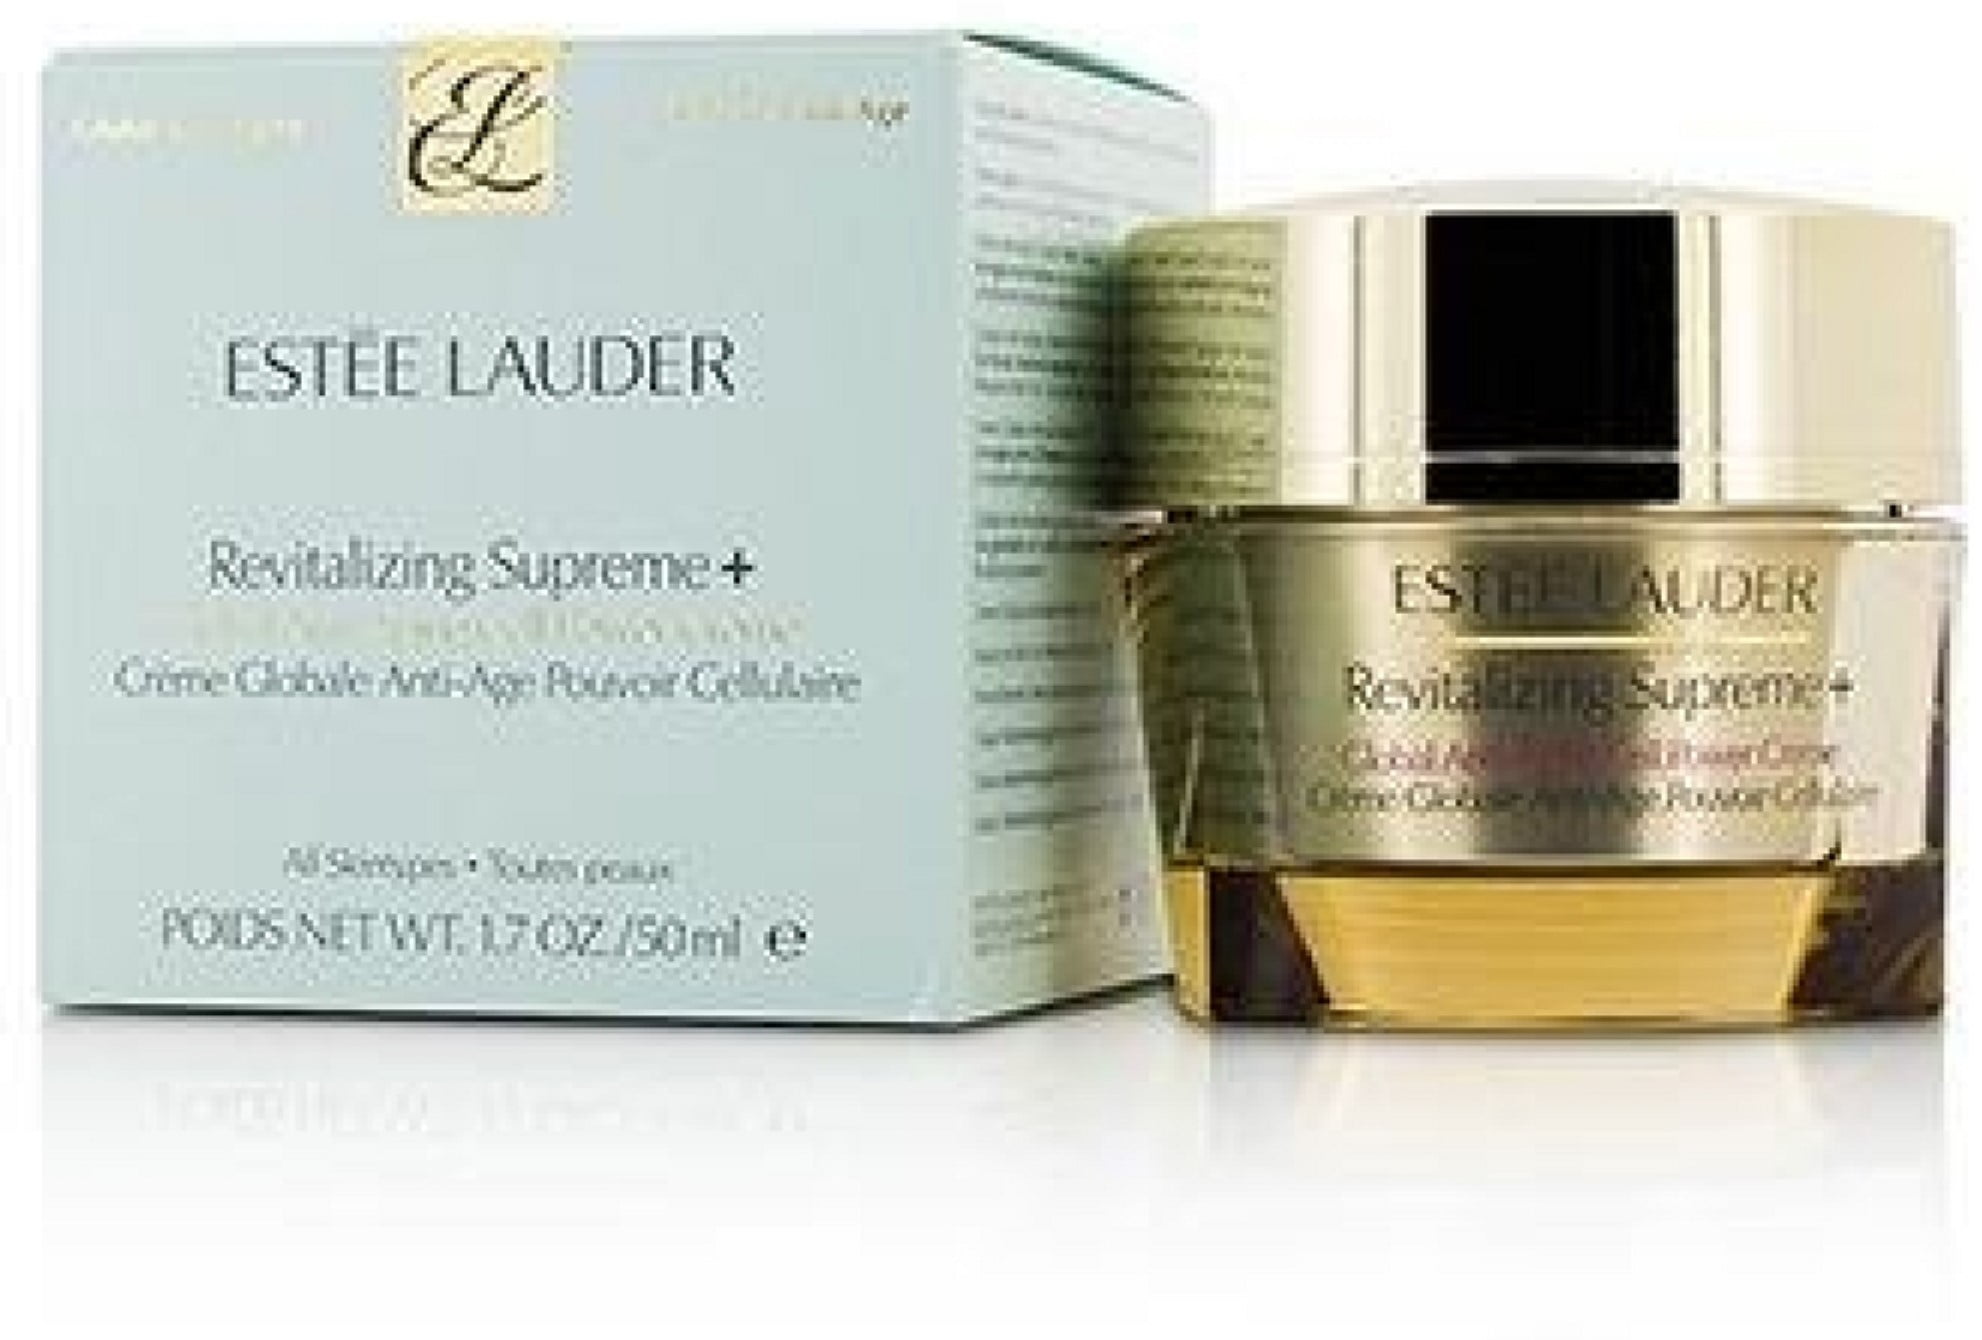 Estee Lauder Revitalizing Supreme+ Global Anti-Aging Cell Power Cream 1.7 oz NIB